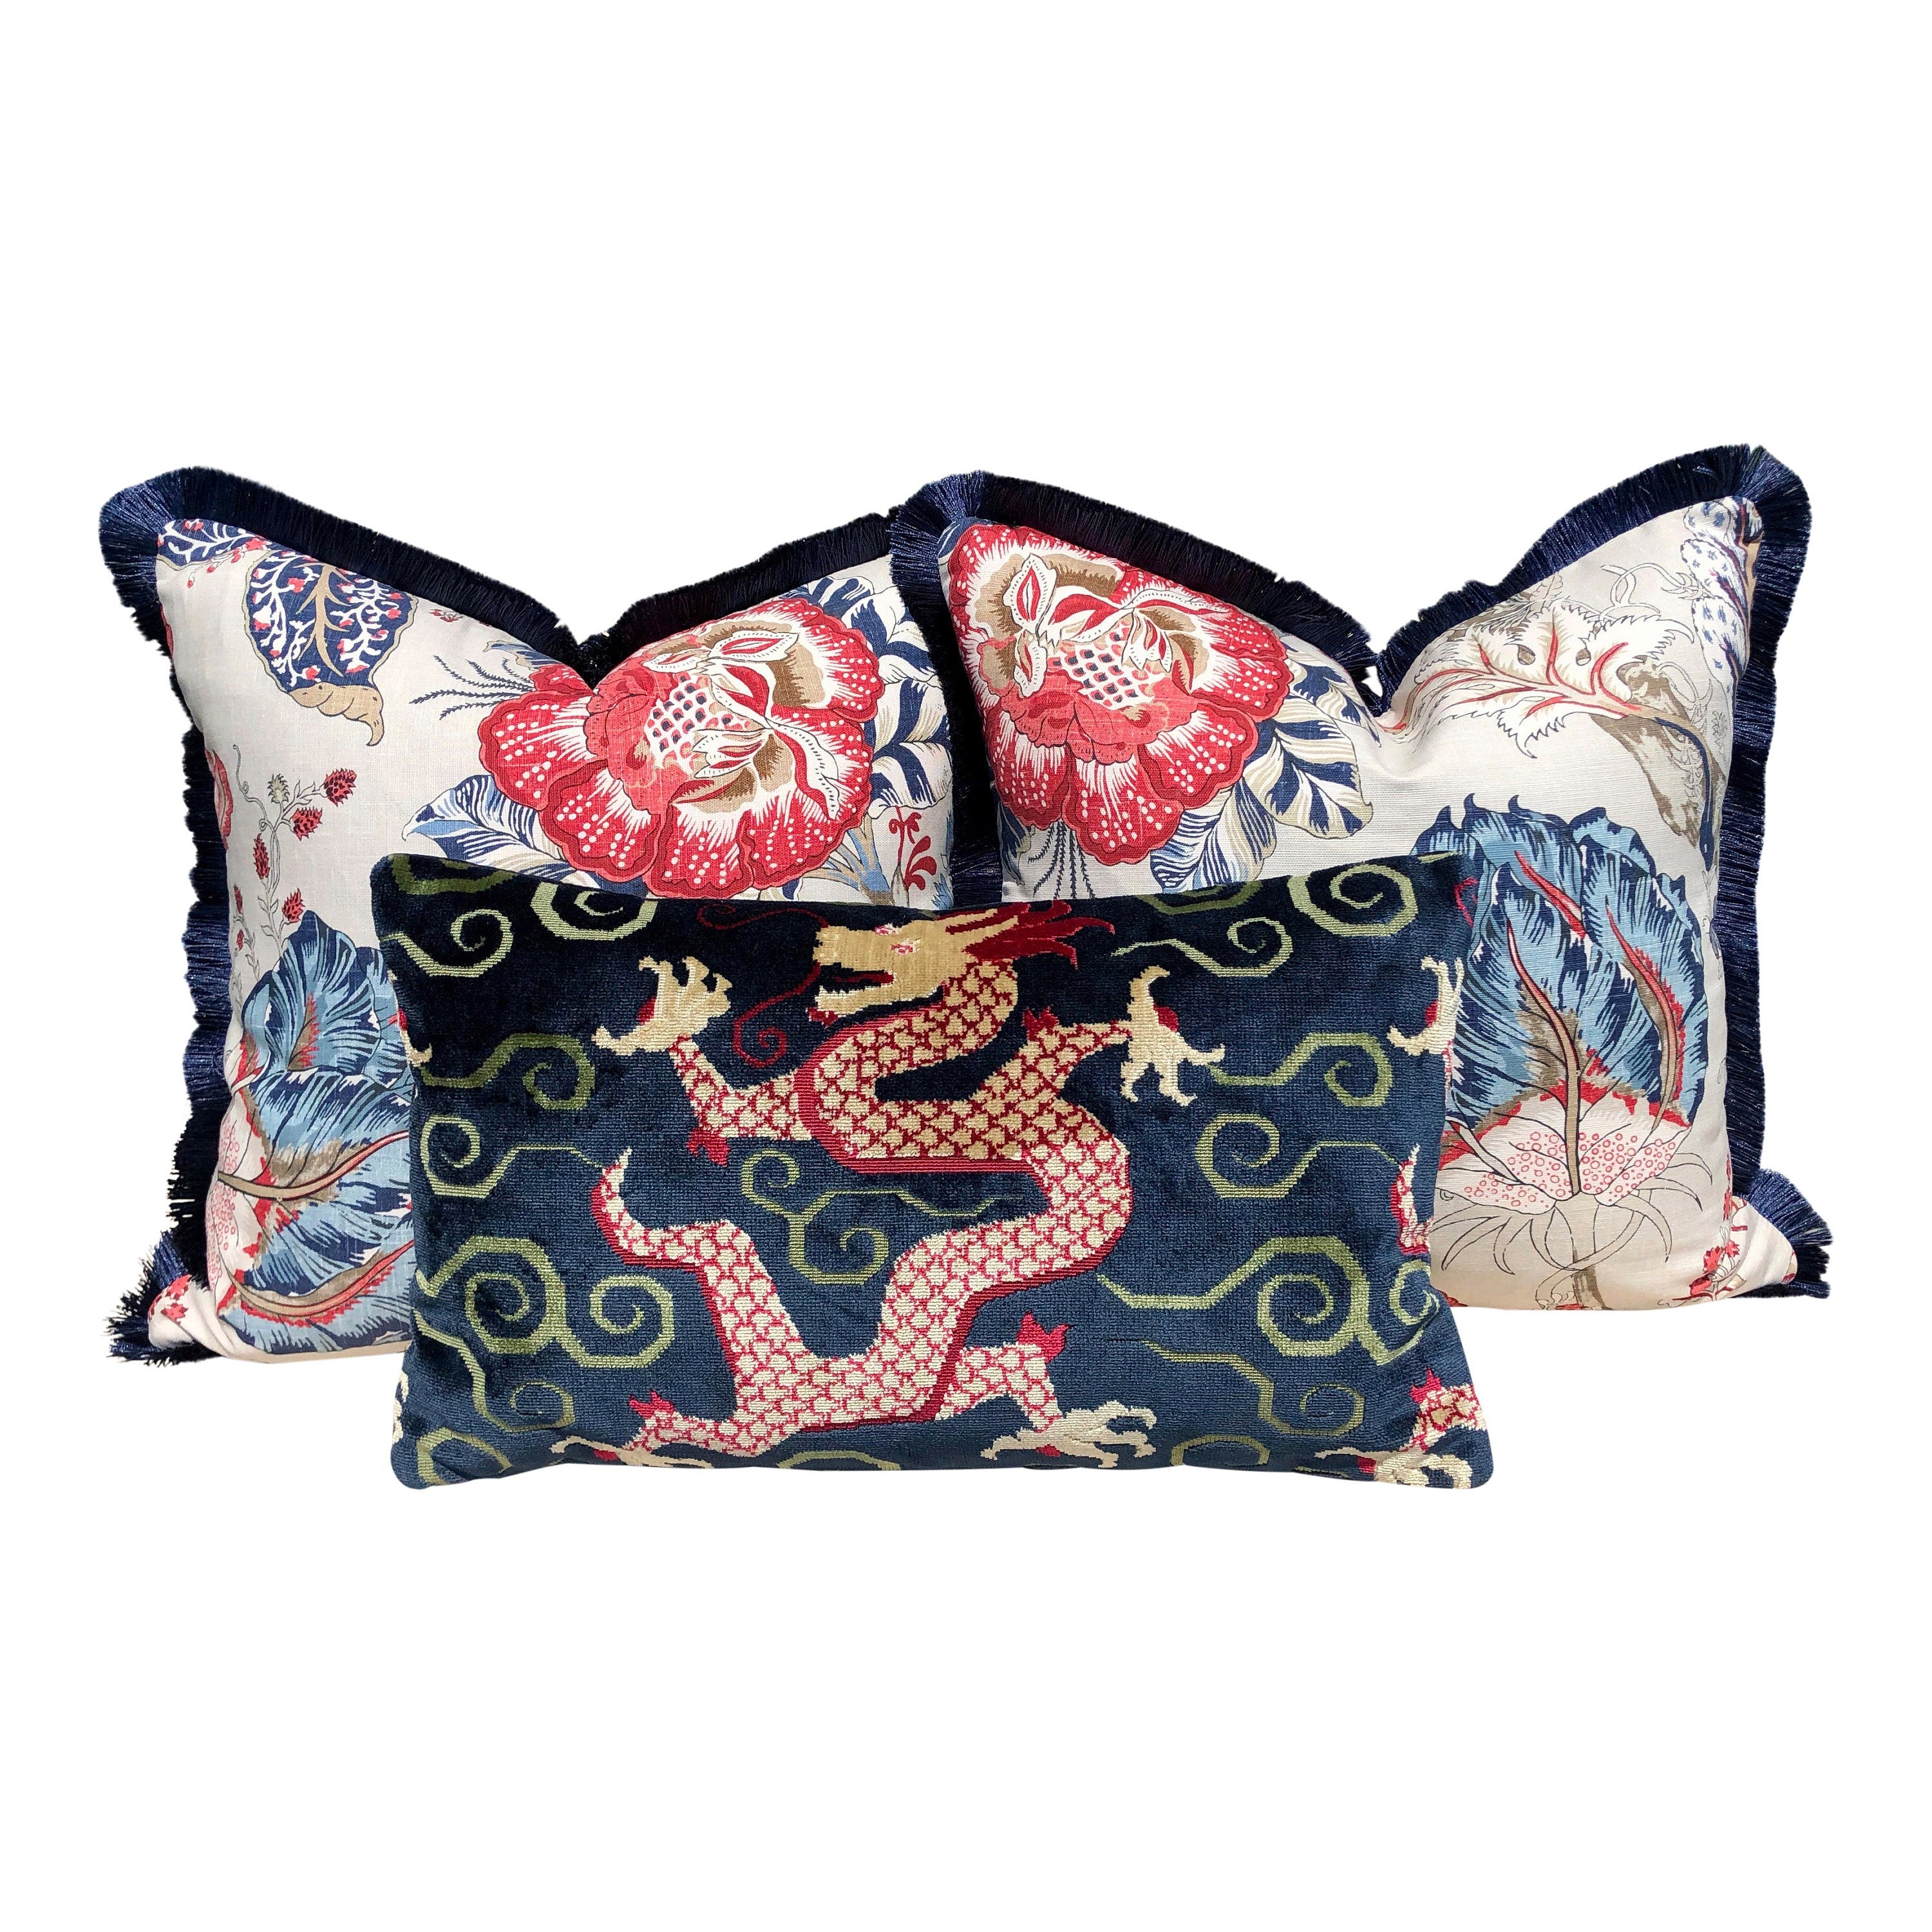 Kalamkari Pillow Red and Blue , Navy Brush Fringe. Lumbar Pillow, Chinoiserie Pillow, accent cushion cover, decorative pillow